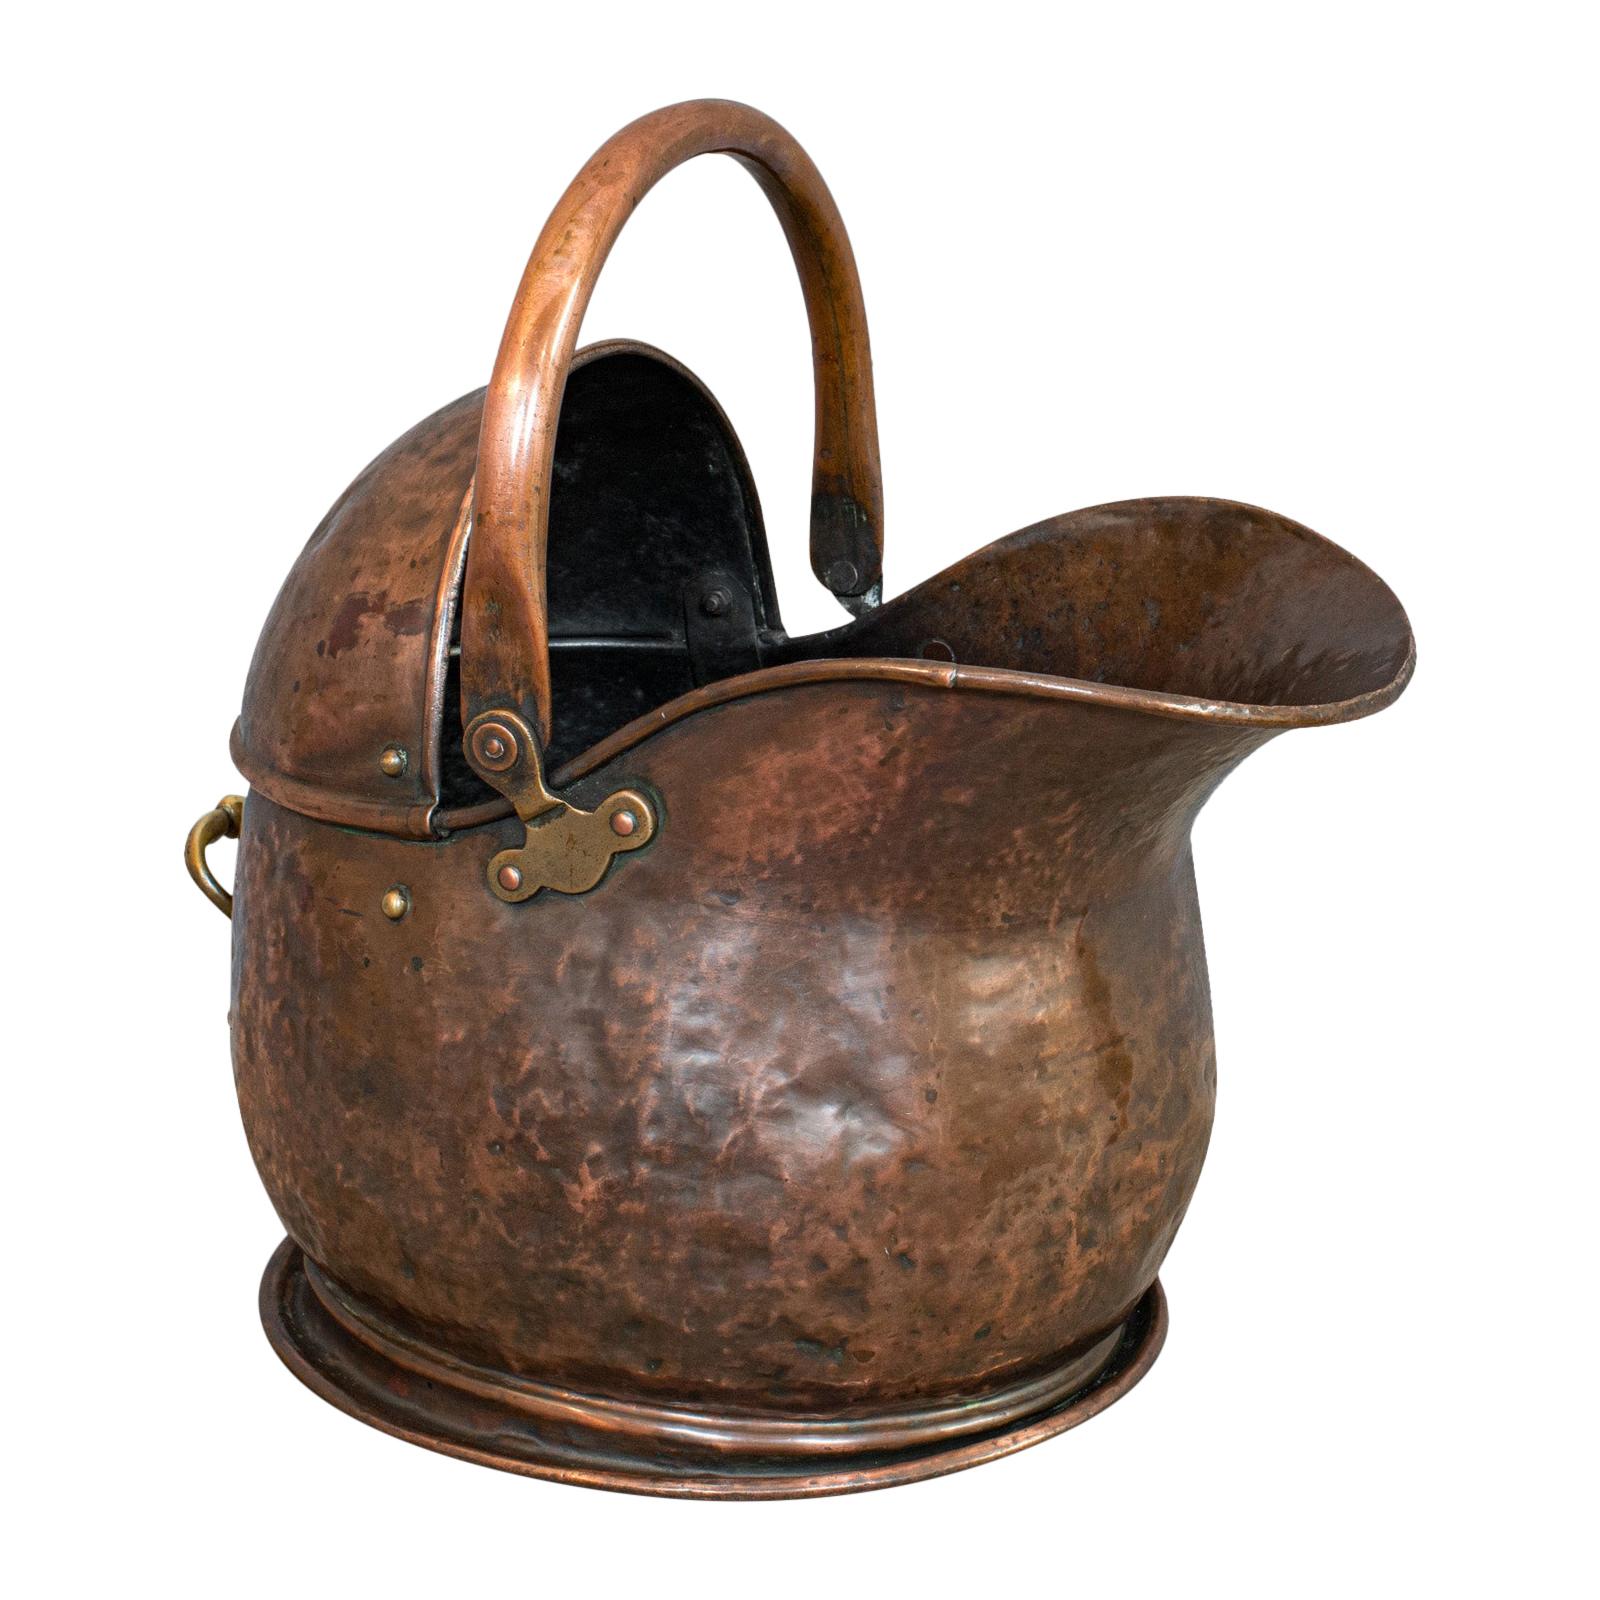 Antique Coal Bucket, English, Copper, Fireside, Scuttle, Victorian, circa 1870